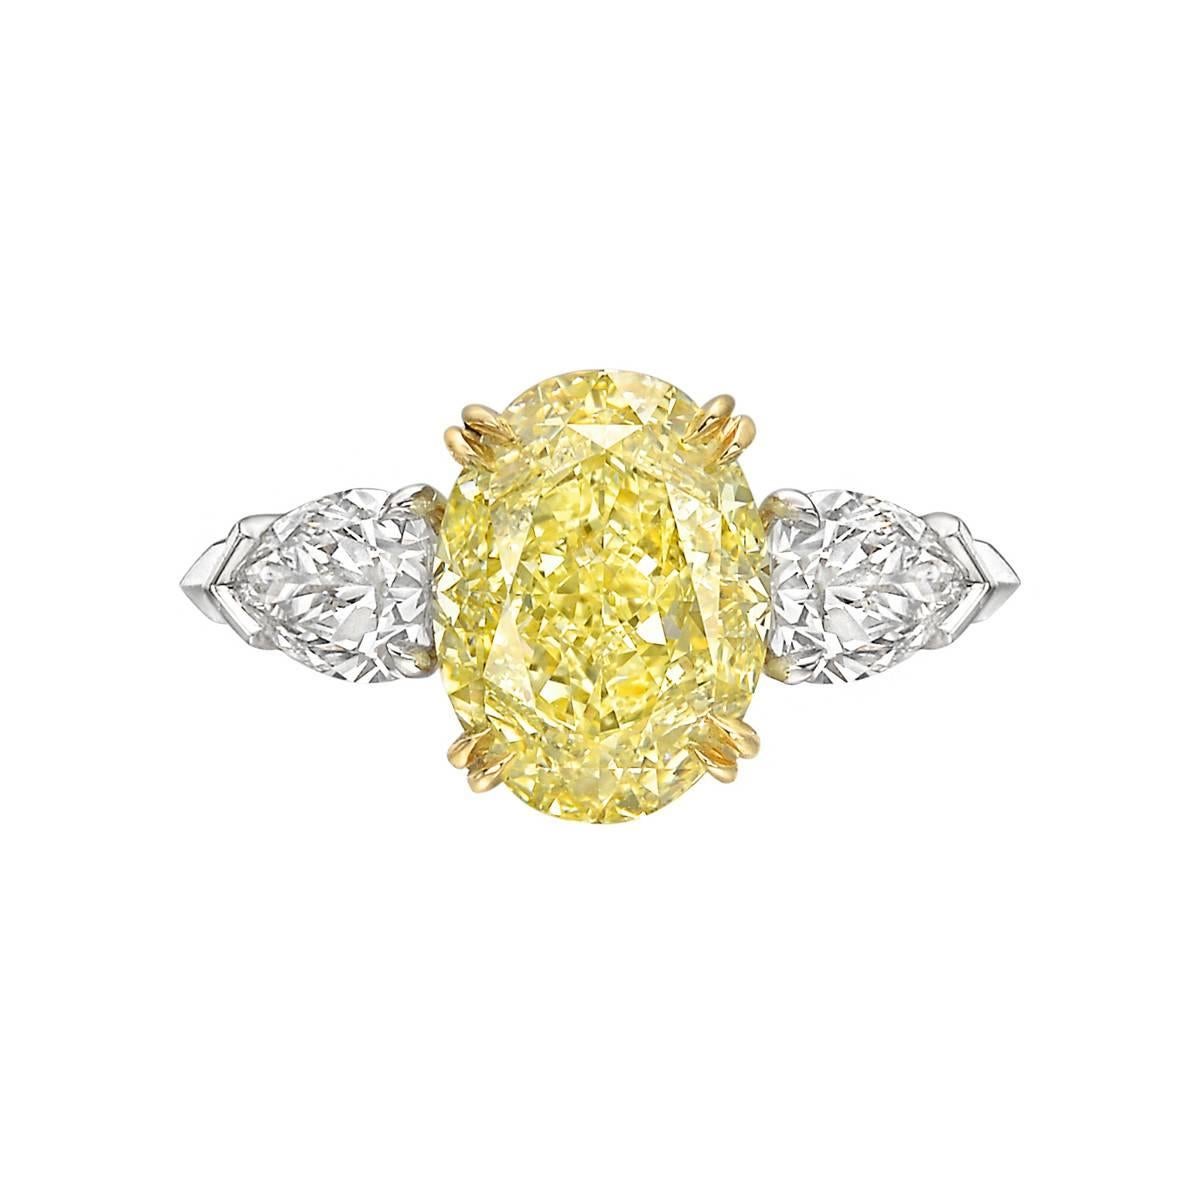 Betteridge 3.26 Carat Fancy Yellow Diamond Ring